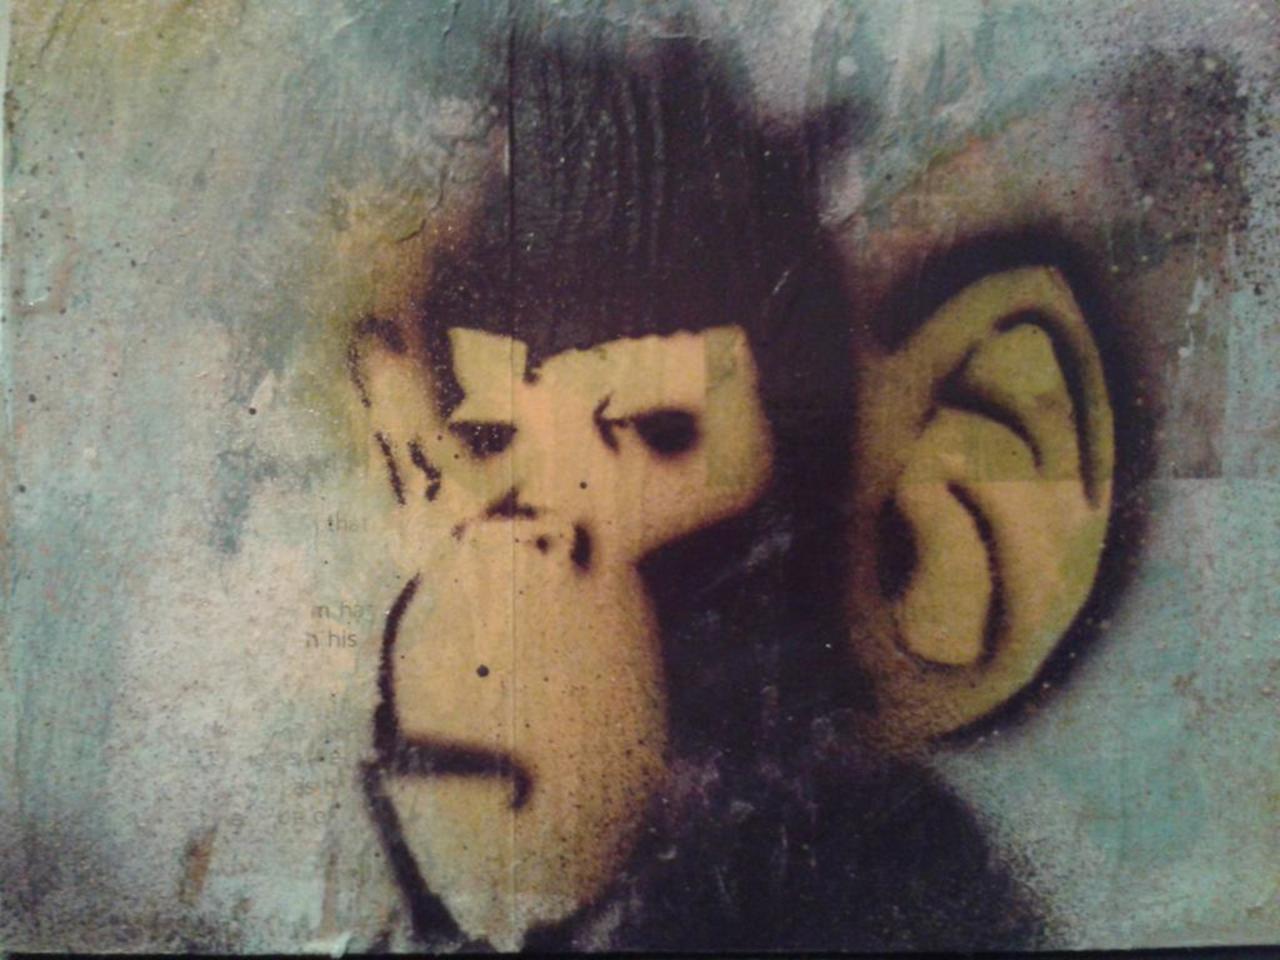 New #stencil  piece
#urban #urbanart #monkeystencil #monkey #spraypaint #streetart #art  #graffiti #graffitiart https://t.co/GRljBZix37